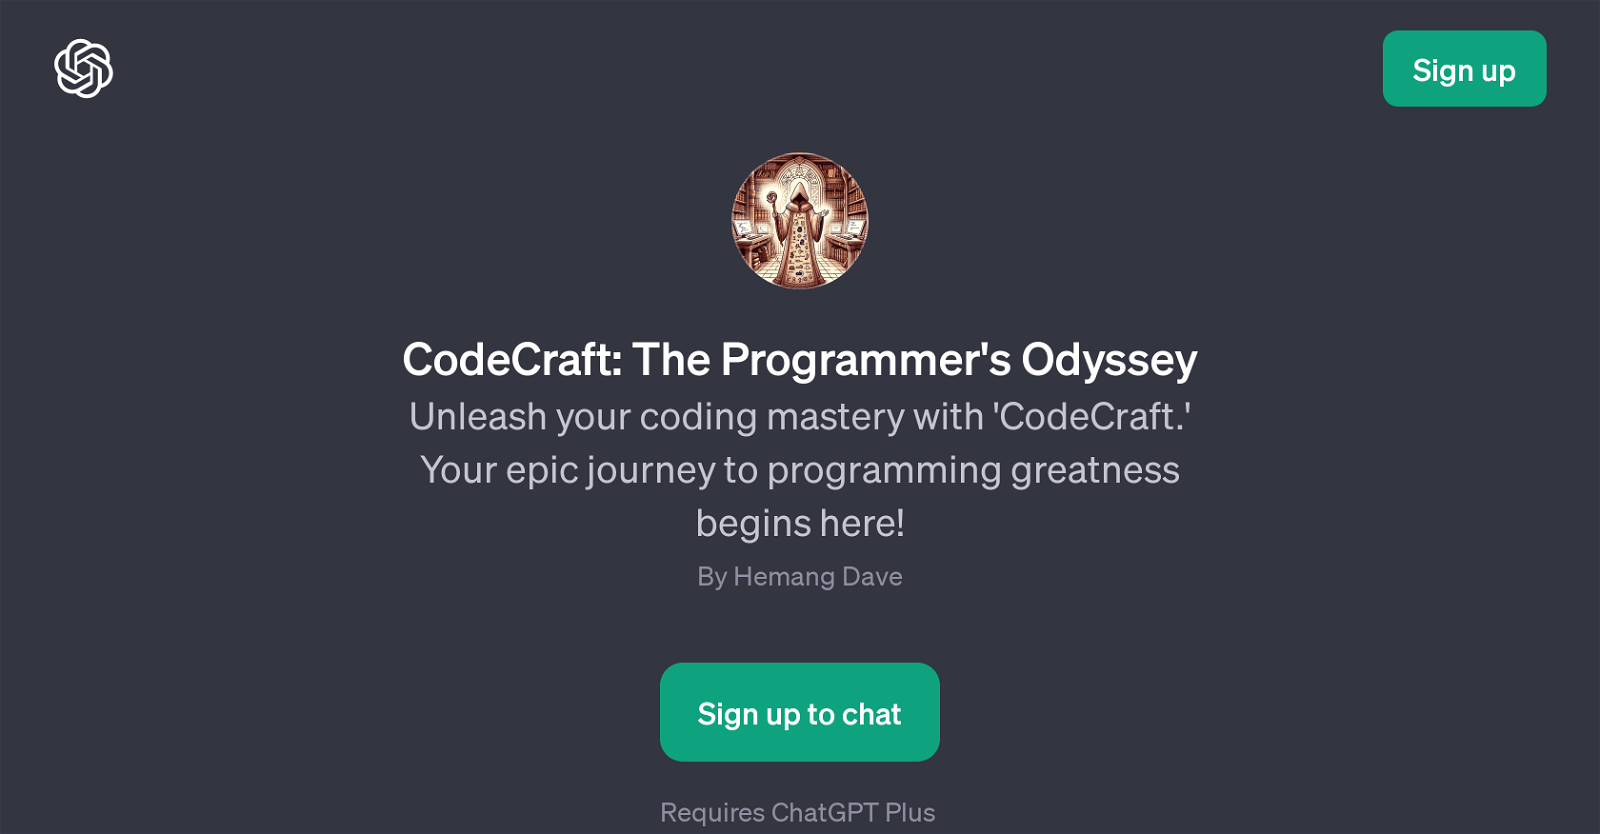 CodeCraft: The Programmer's Odyssey website